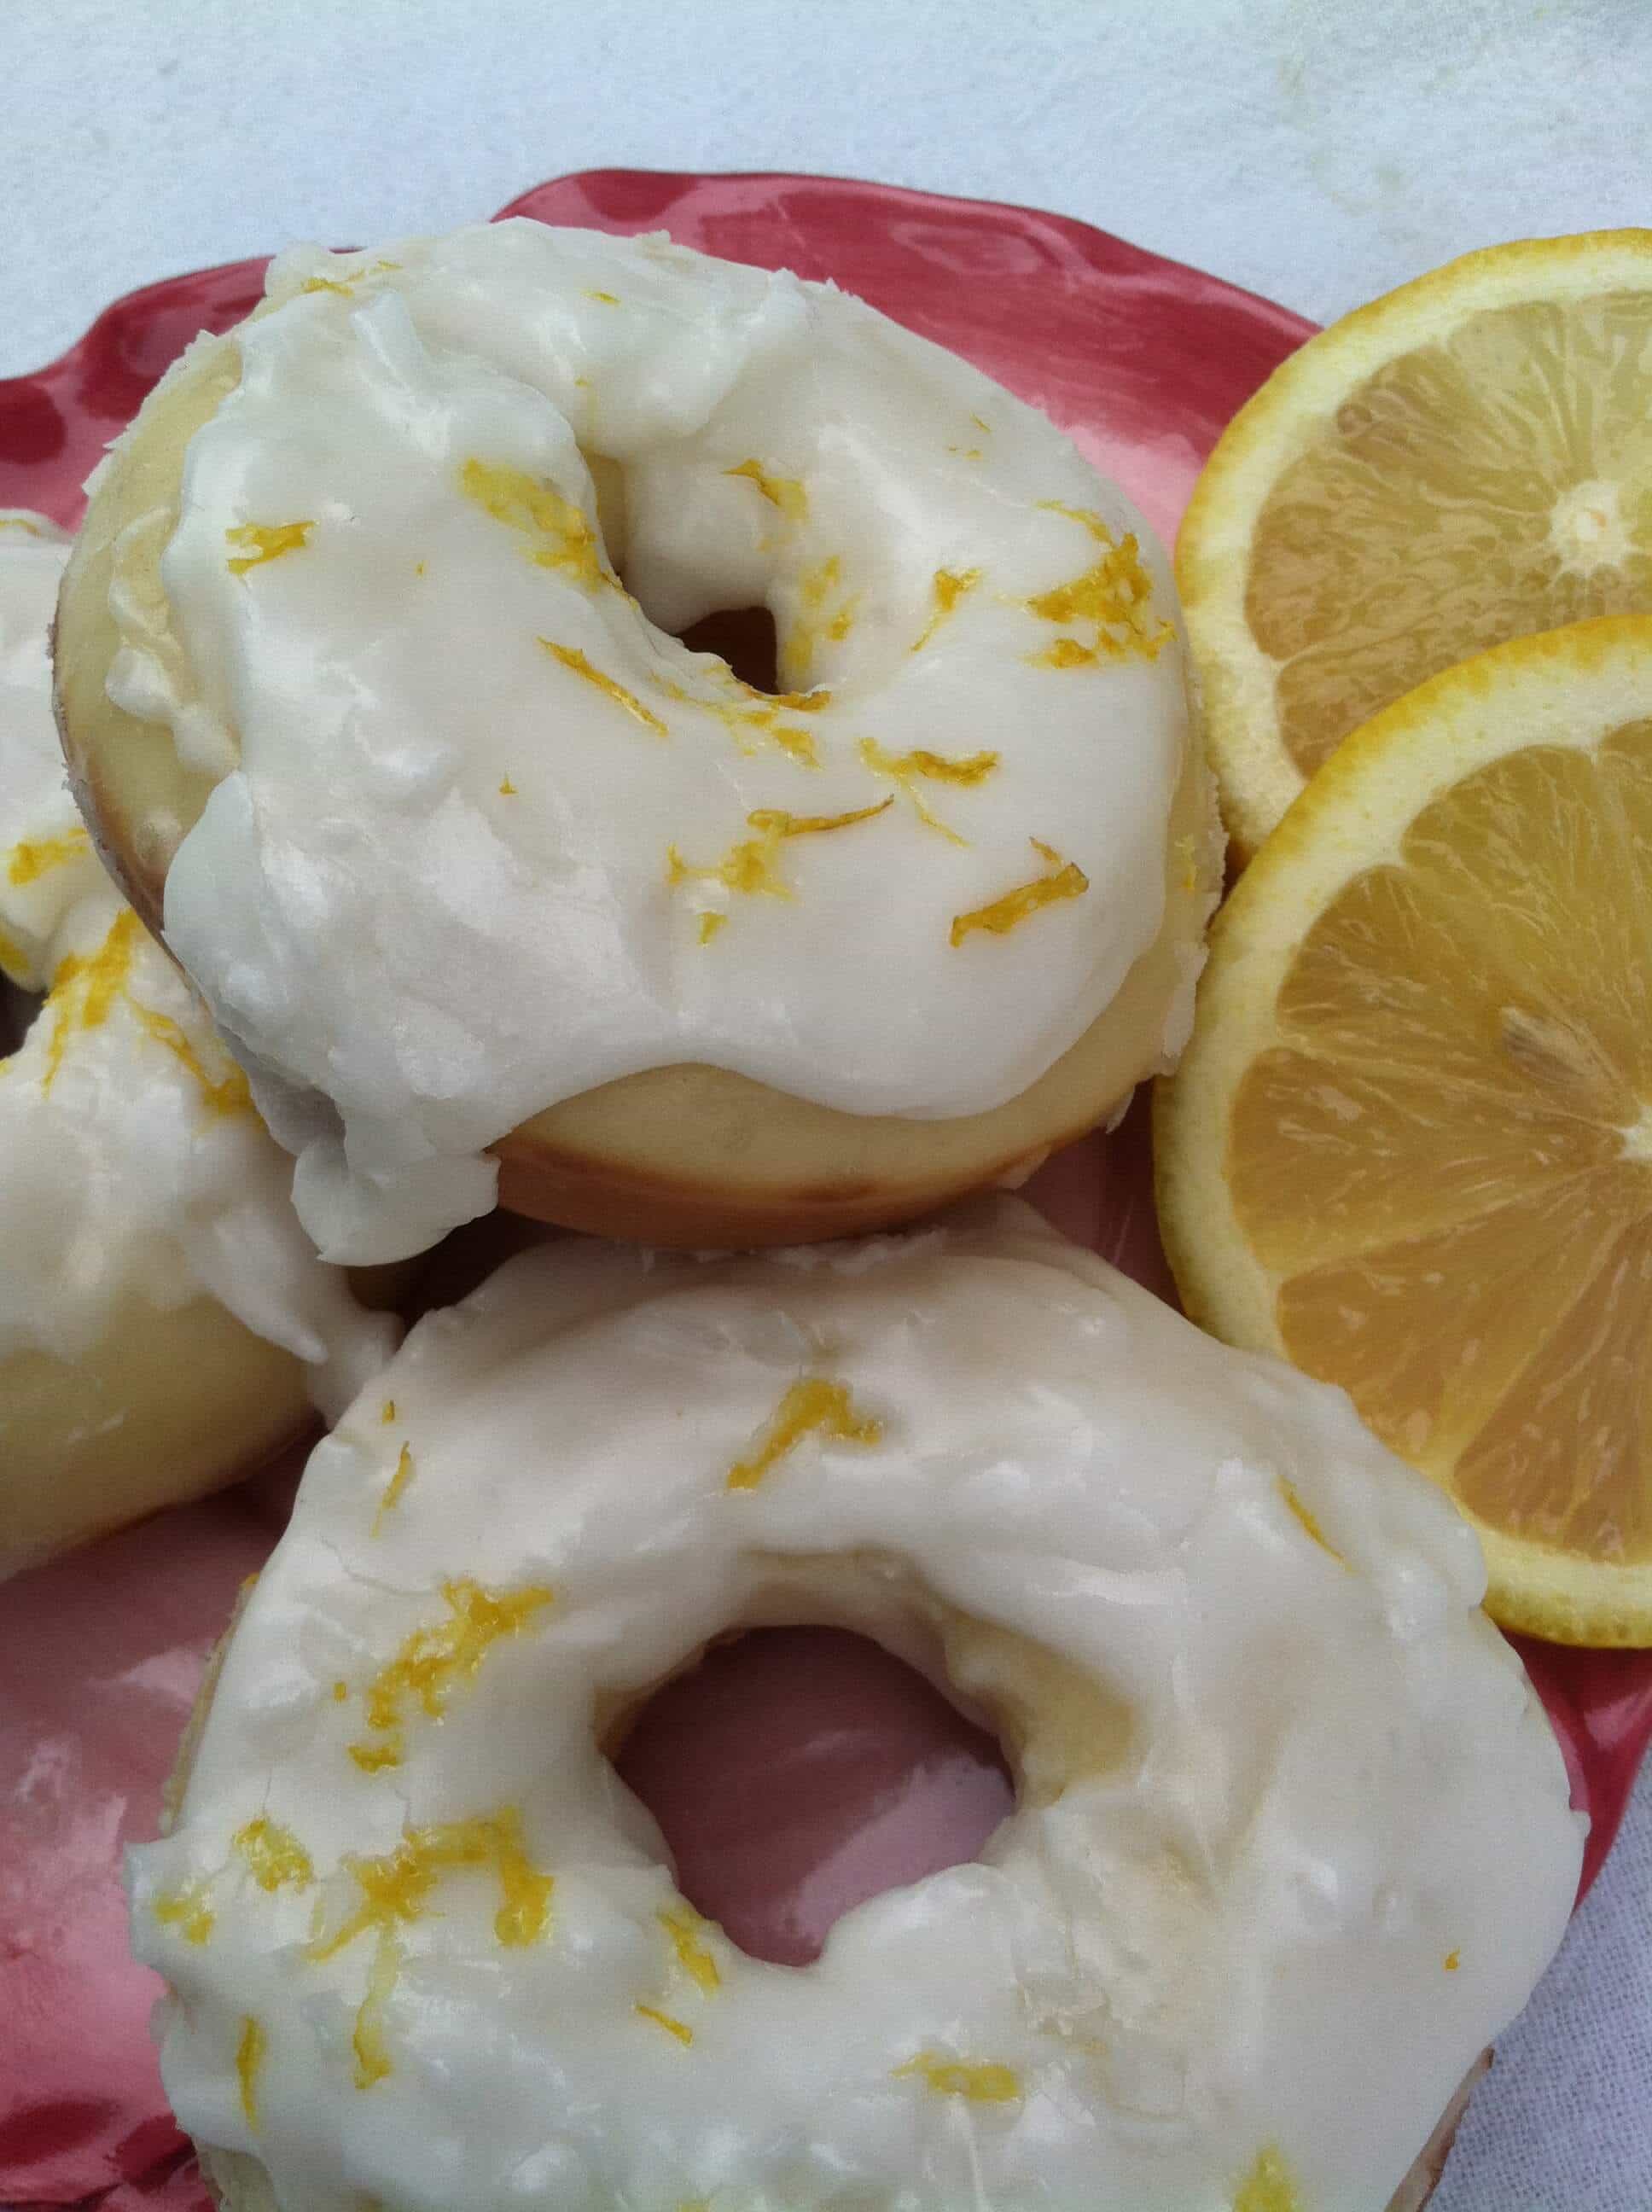 Lemon Glazed Donuts